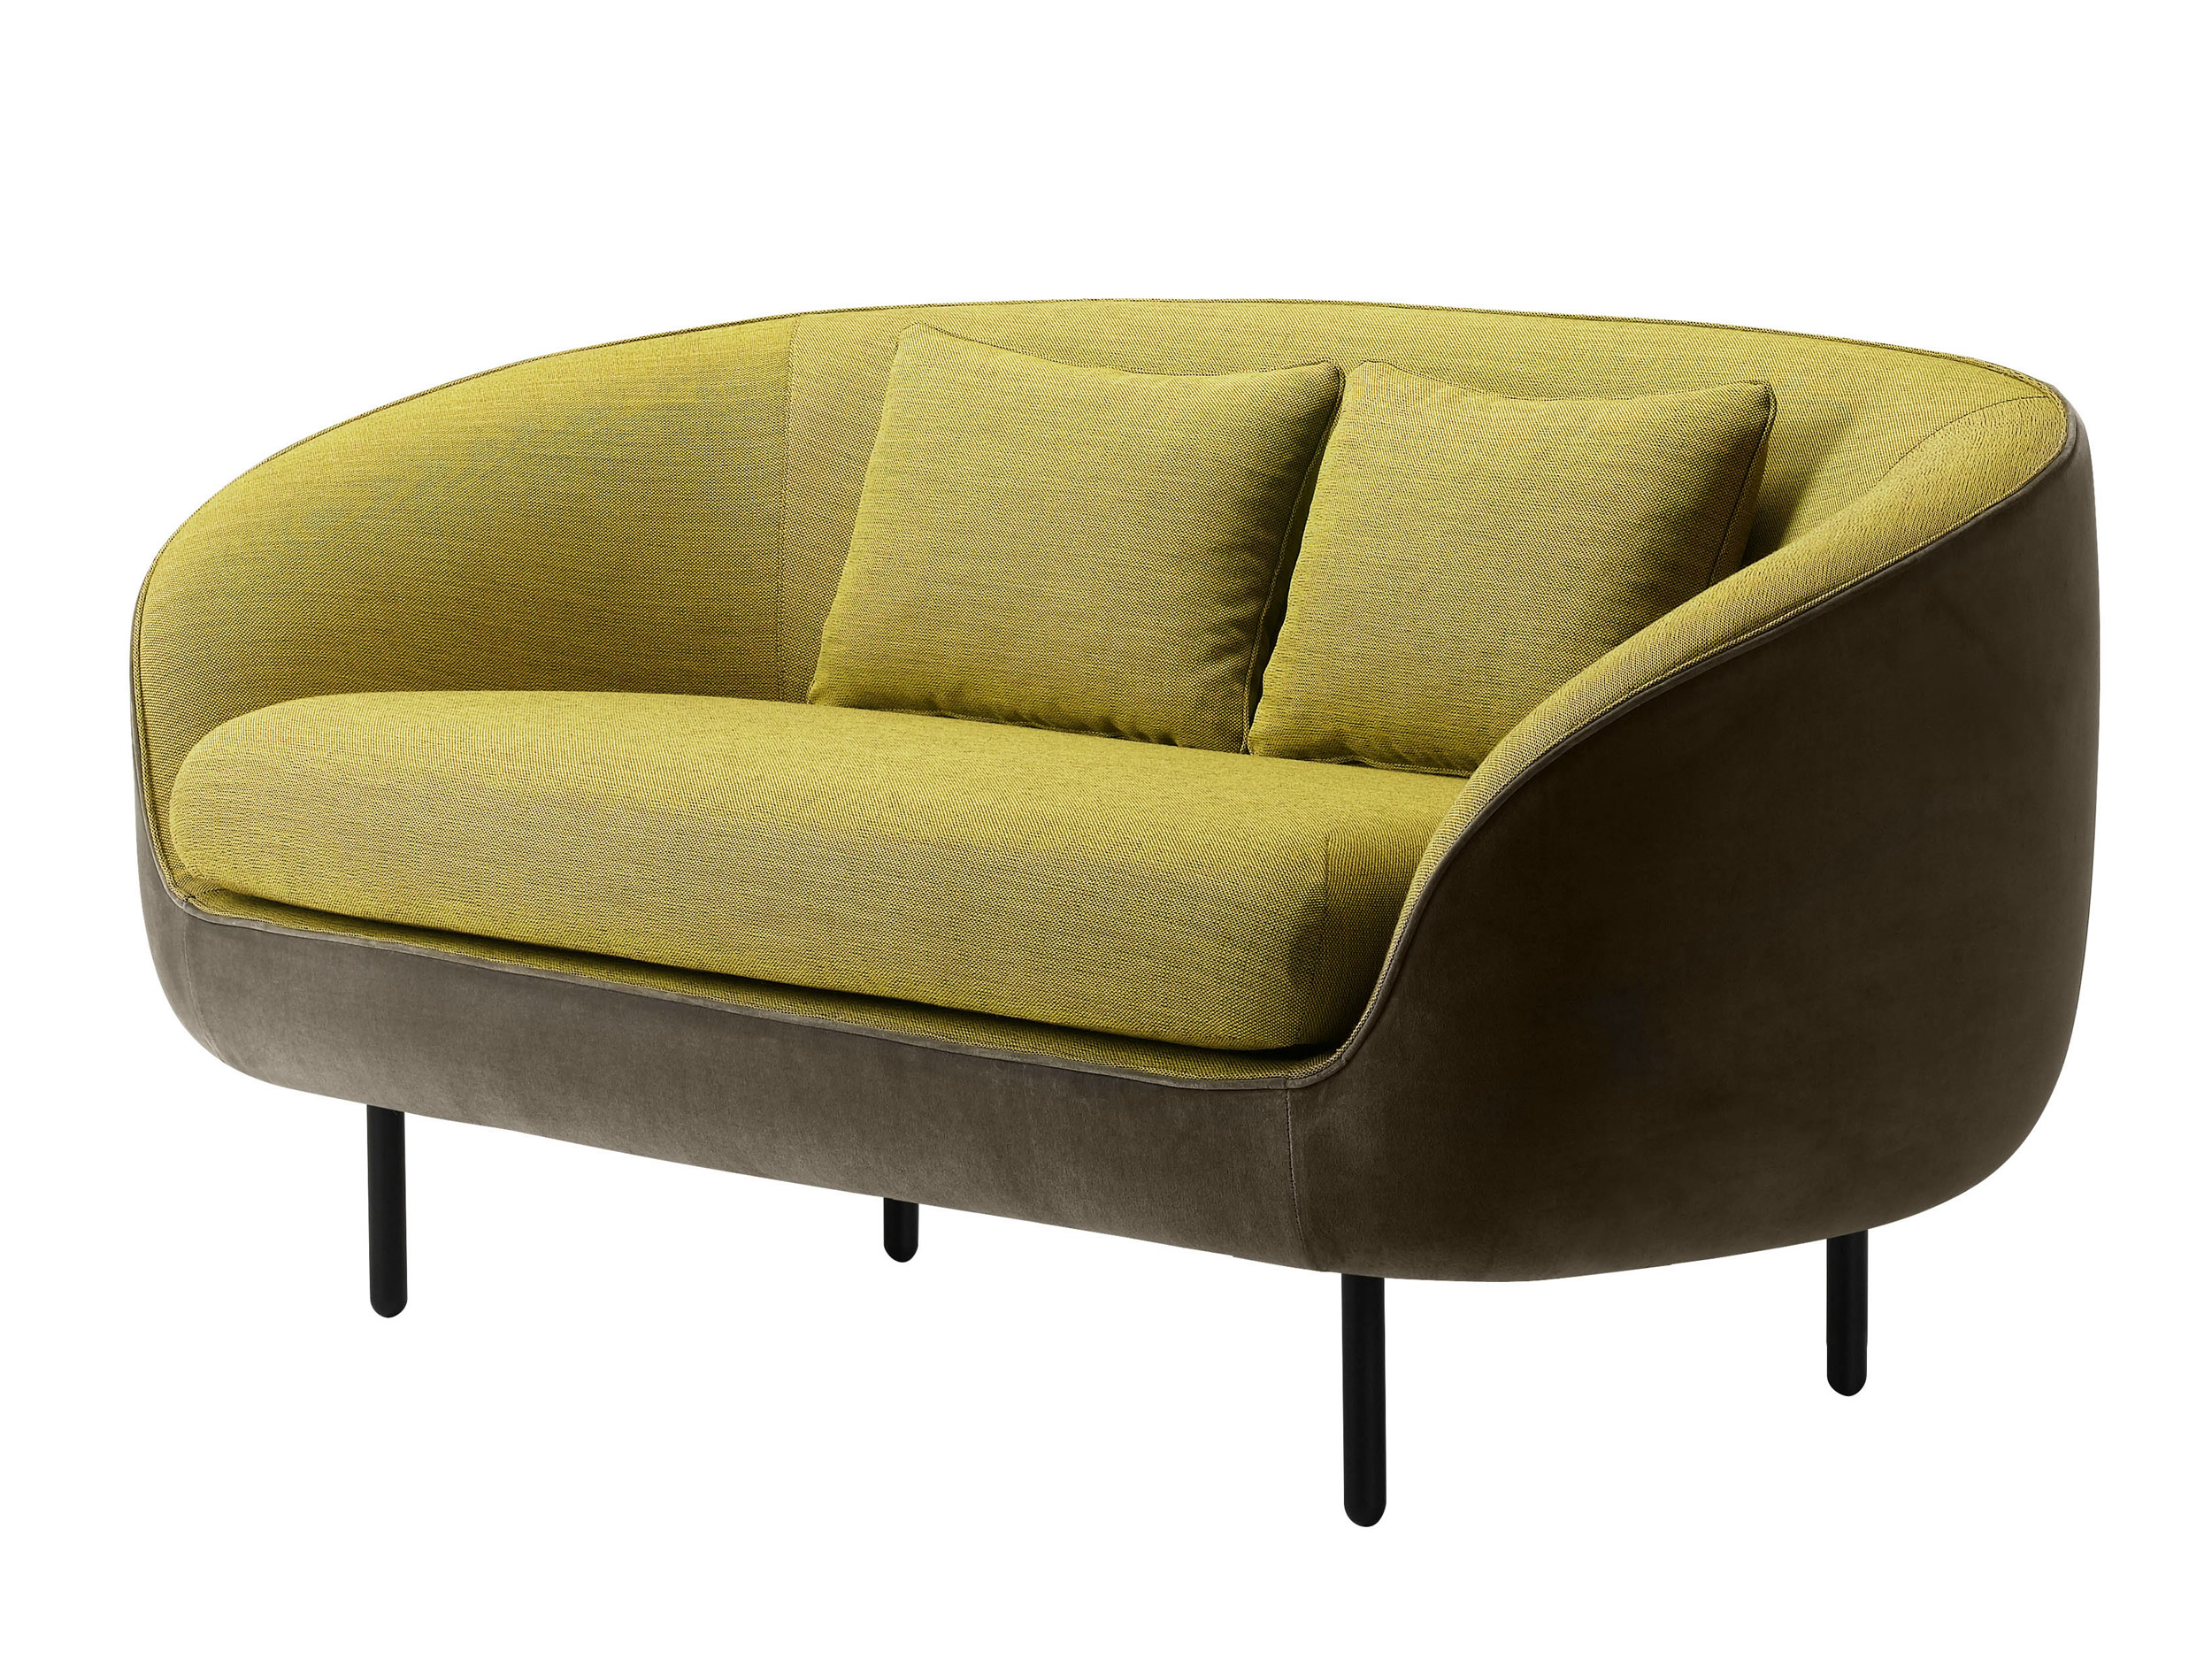 Haiku Low Sofa by GamFratesi Design for Fredericia